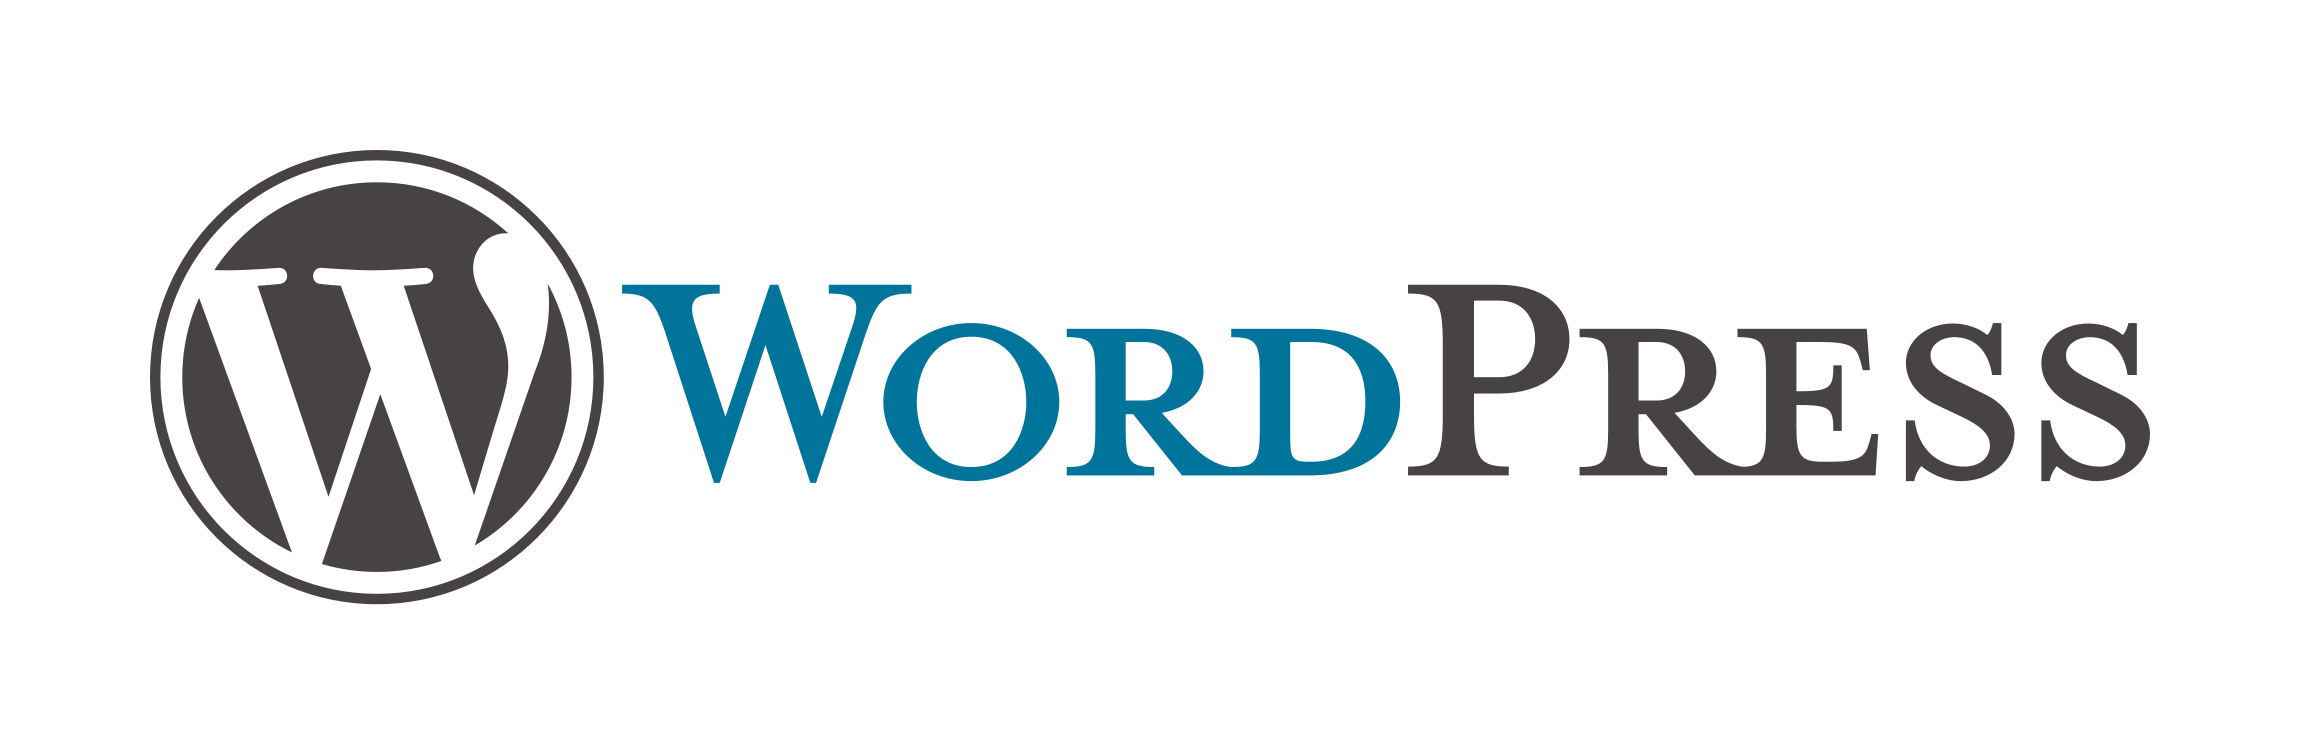 WordPress Logo Transparent Images